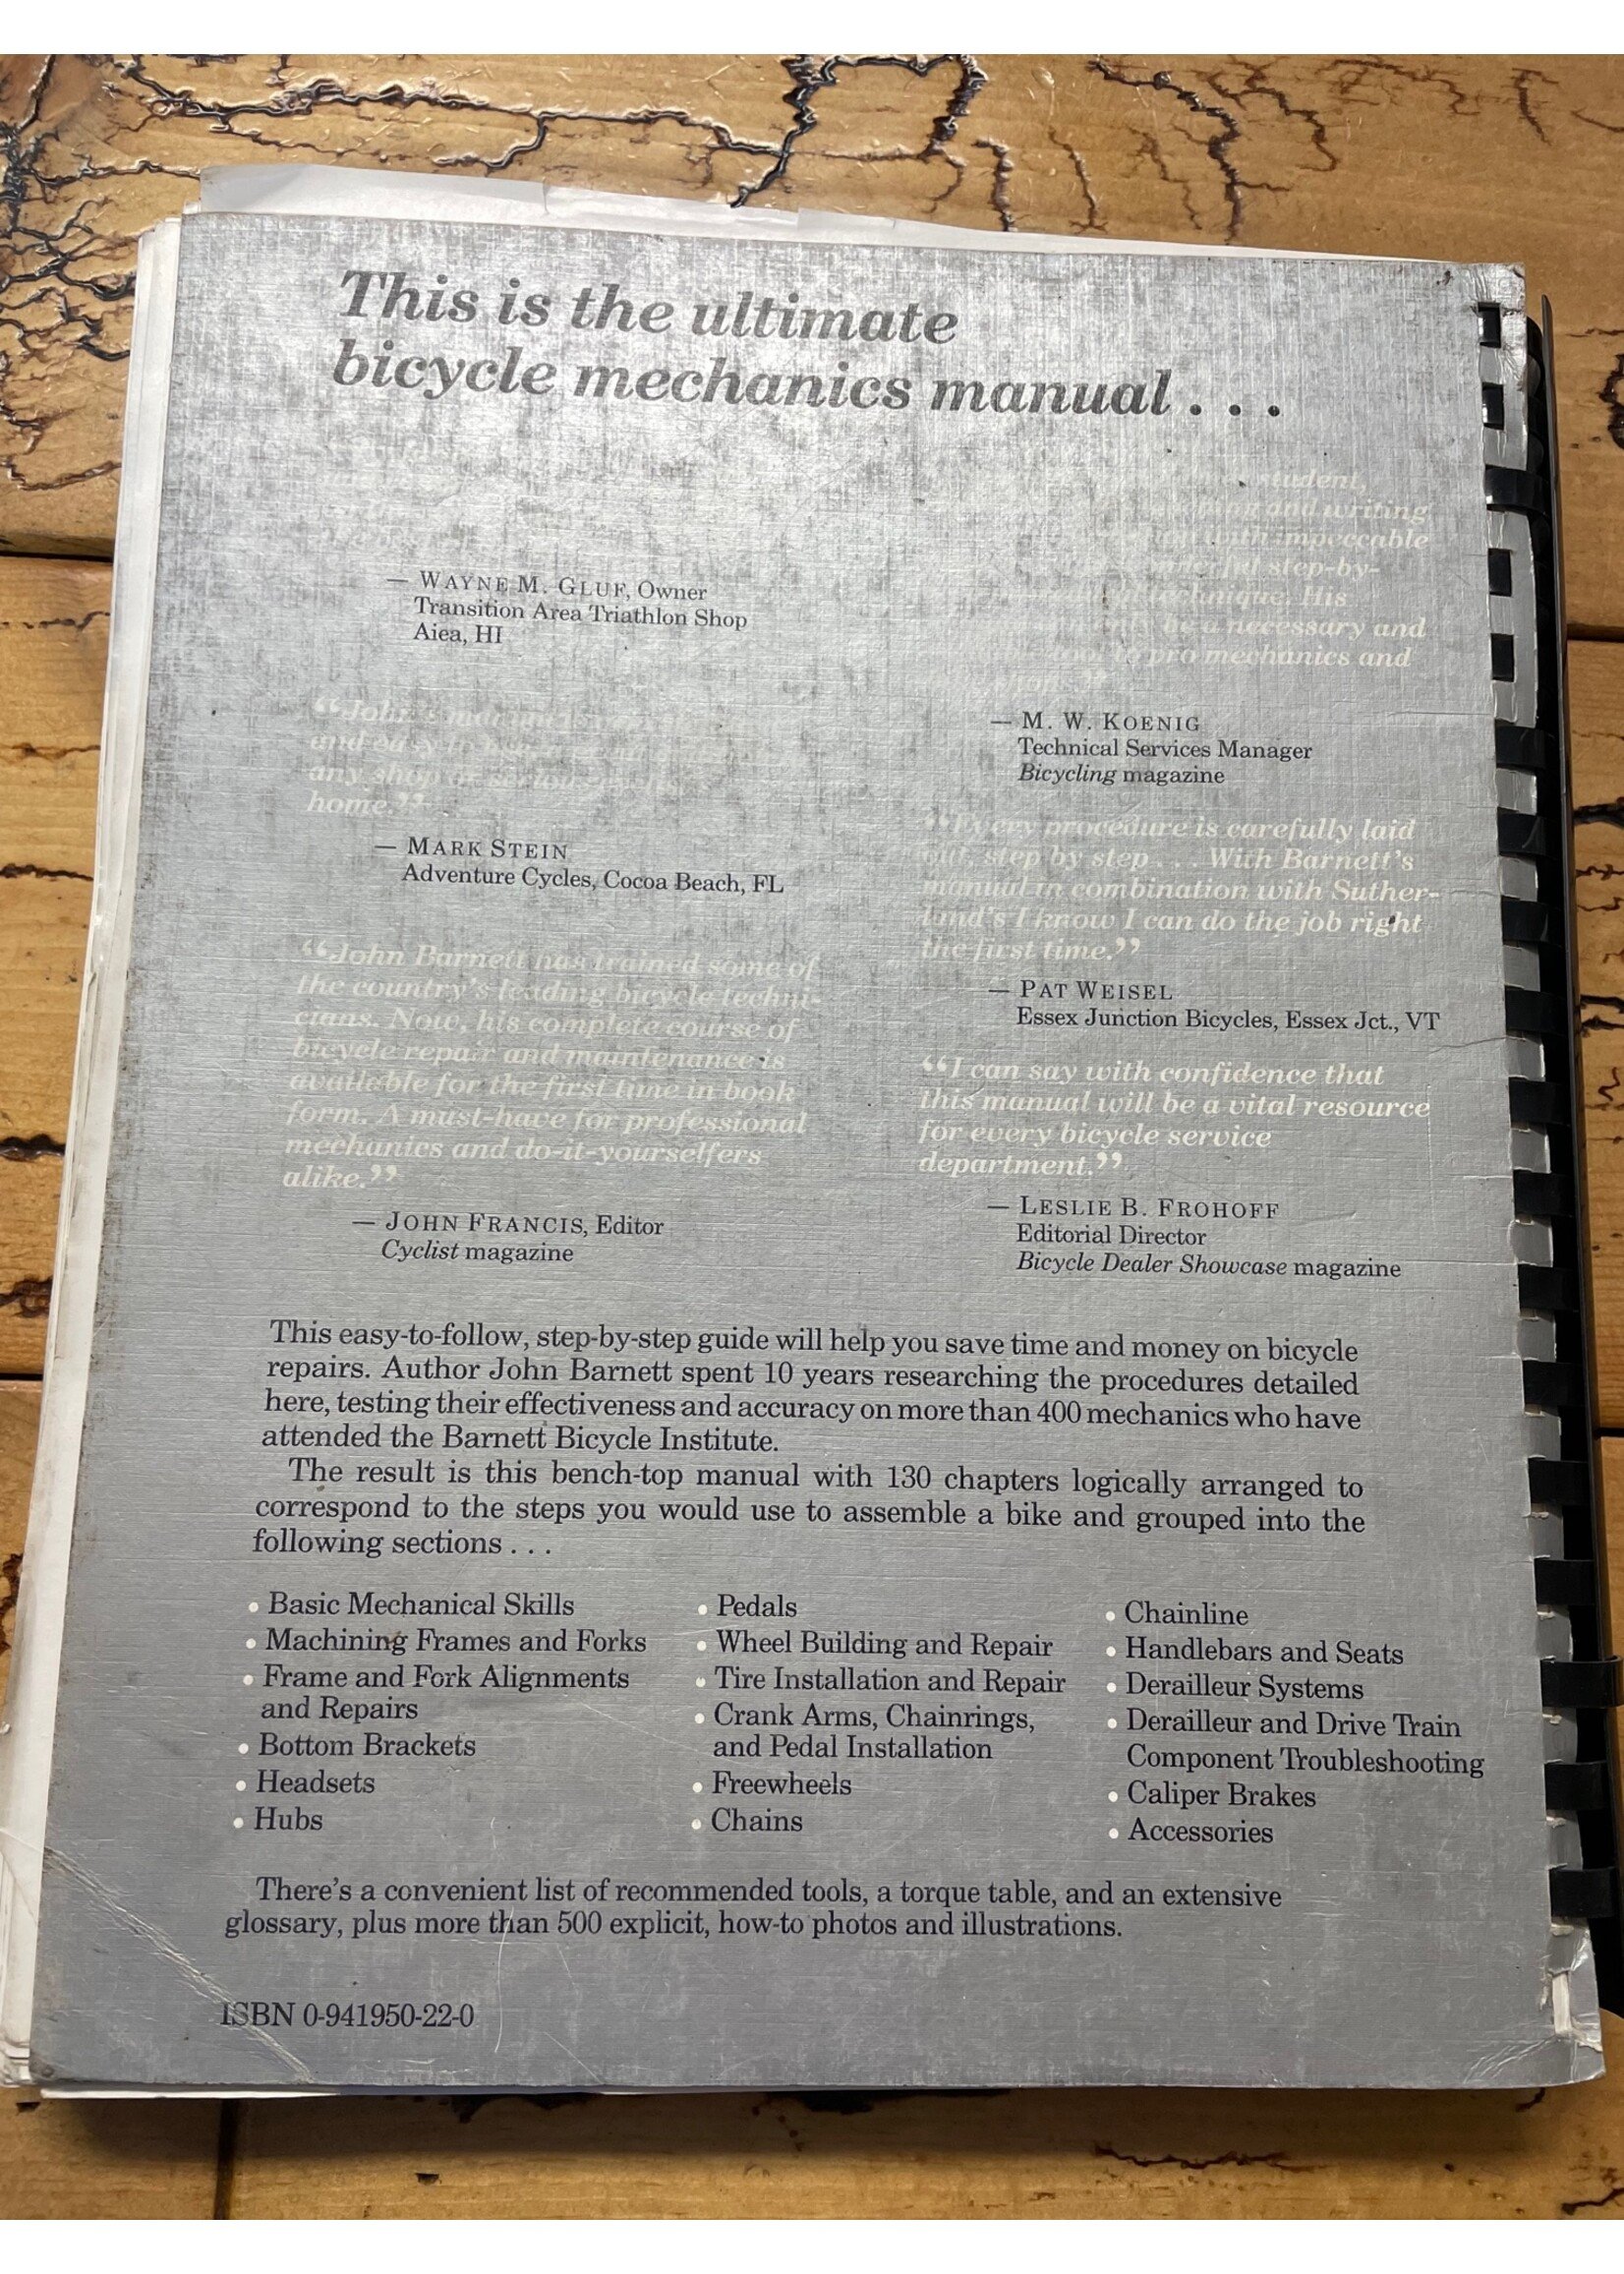 Barnett's Manual Analysis And Procedures For Bicycle Mechanics 1989